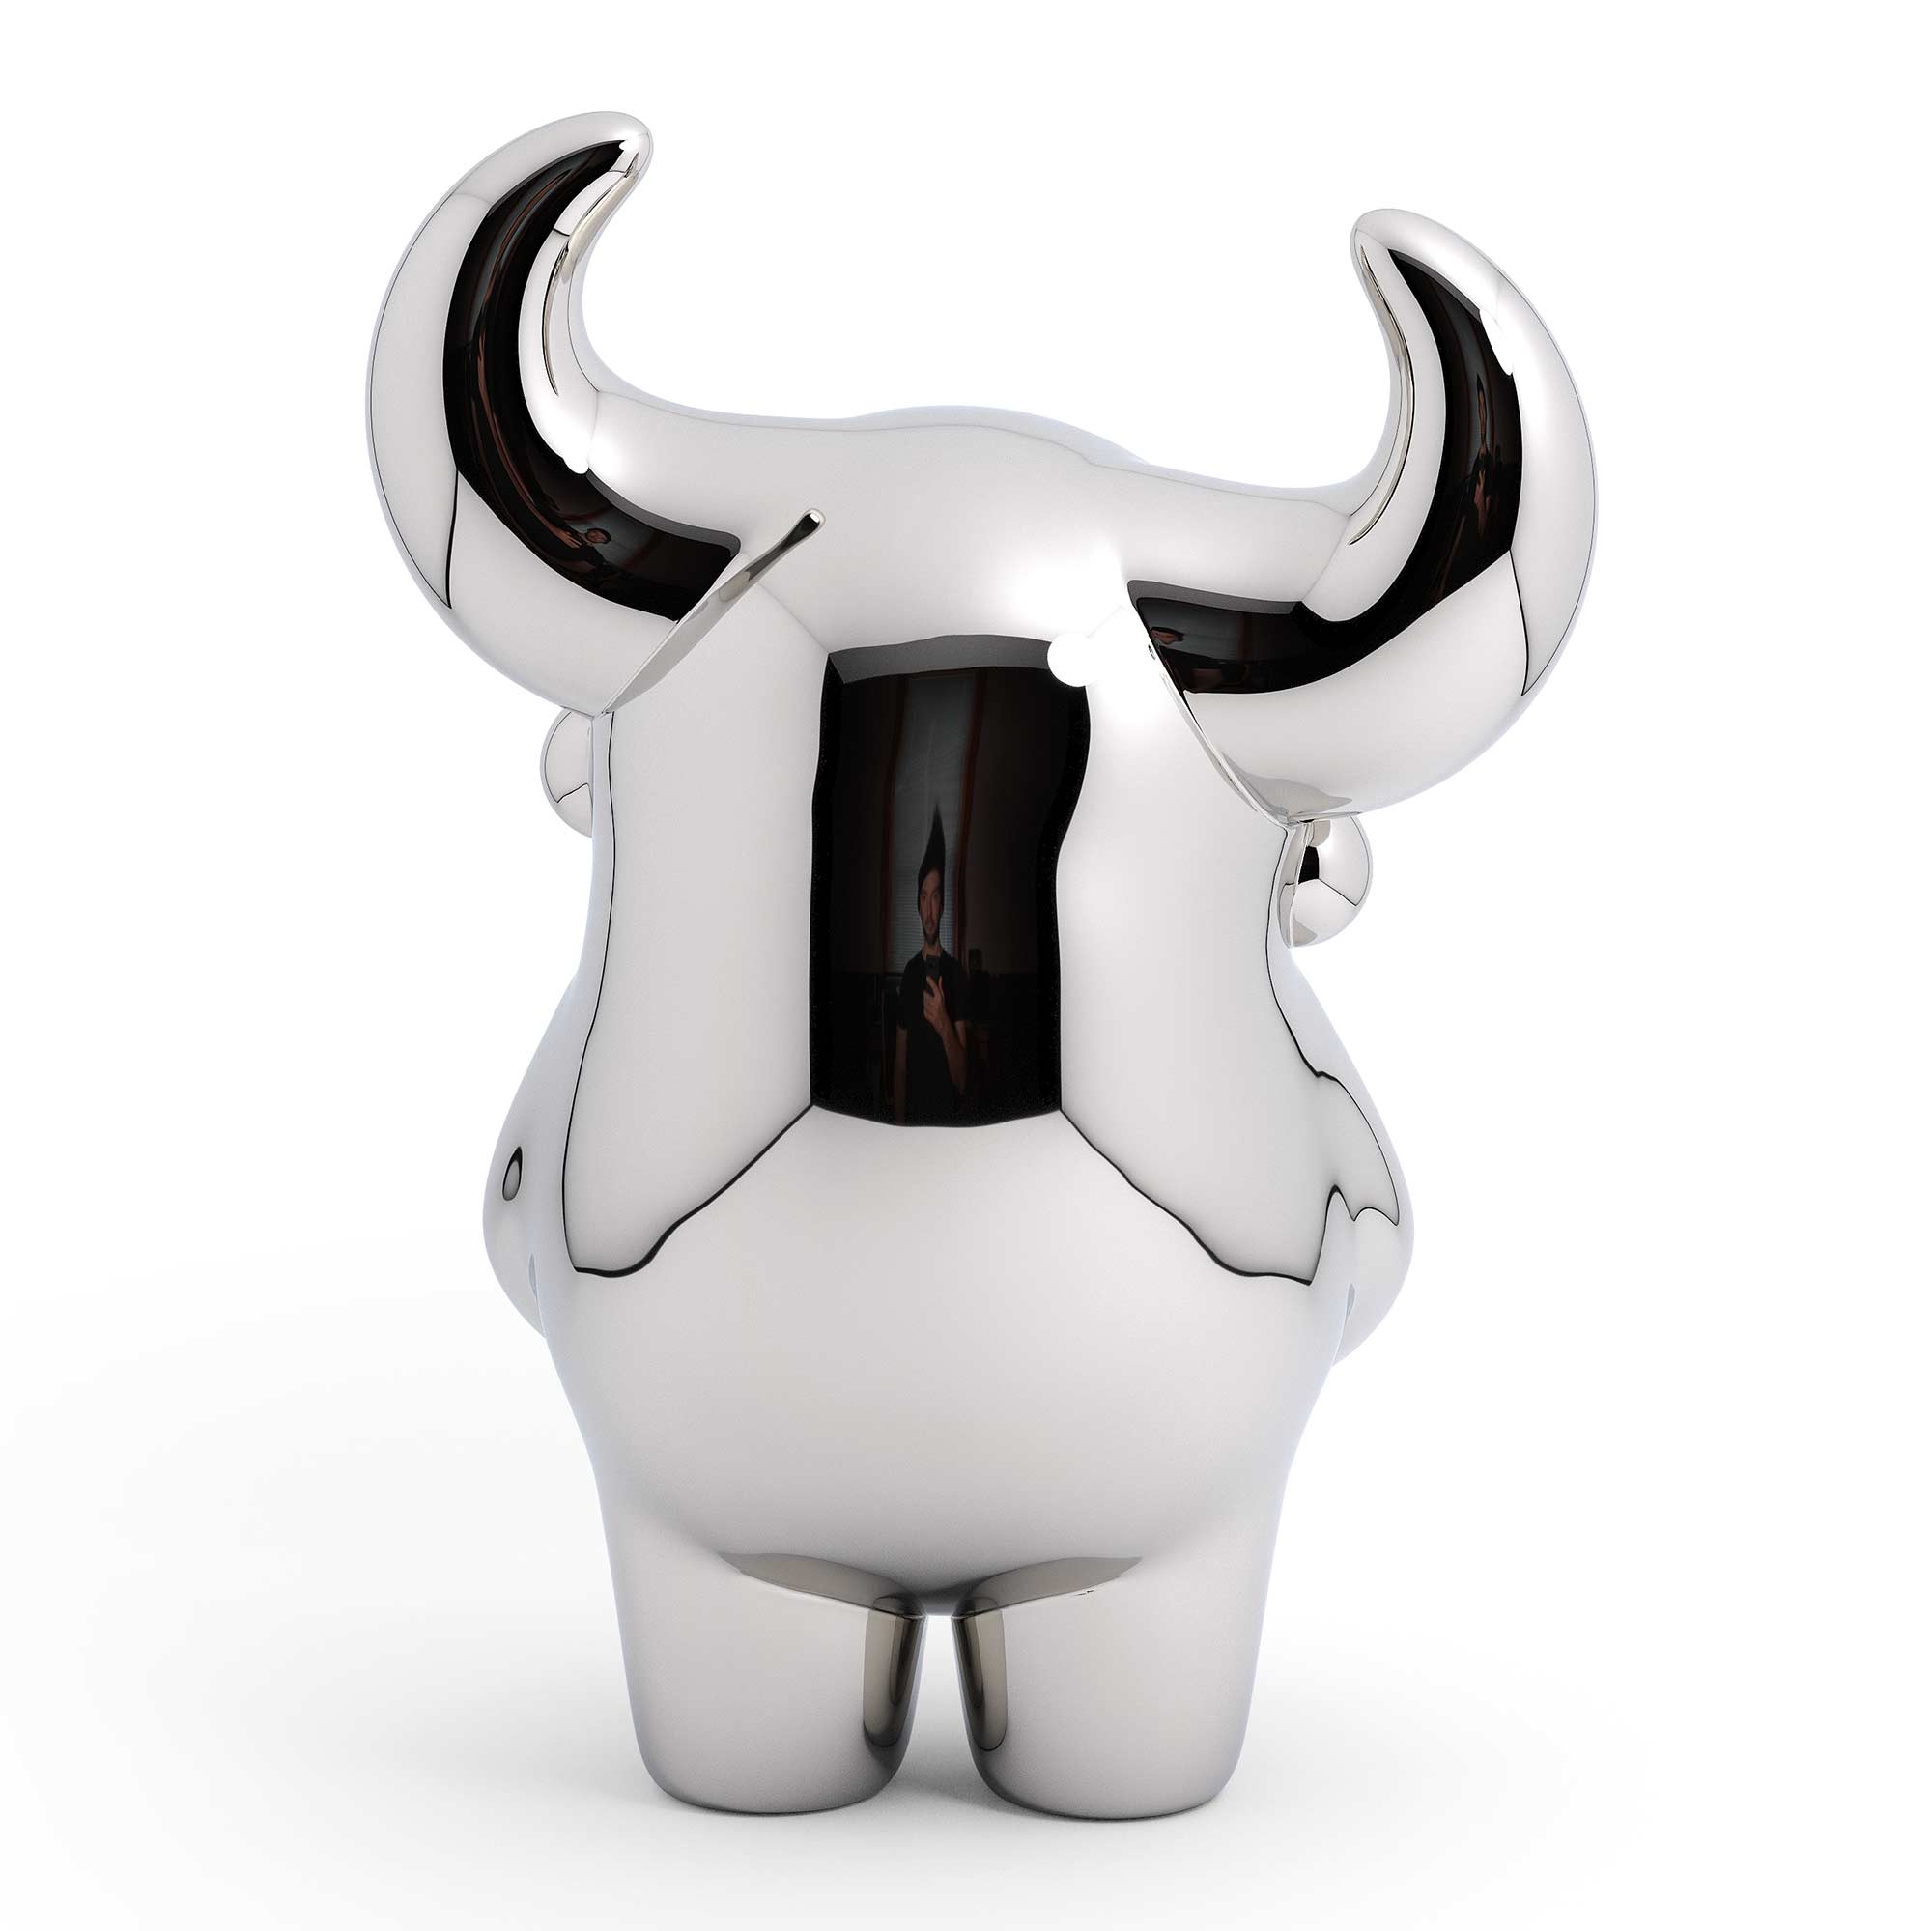 OX “prosperous” bull sculpture, Mirror Polished Stainless Steel Sculpture, by artist Ferdi B Dick, back view 